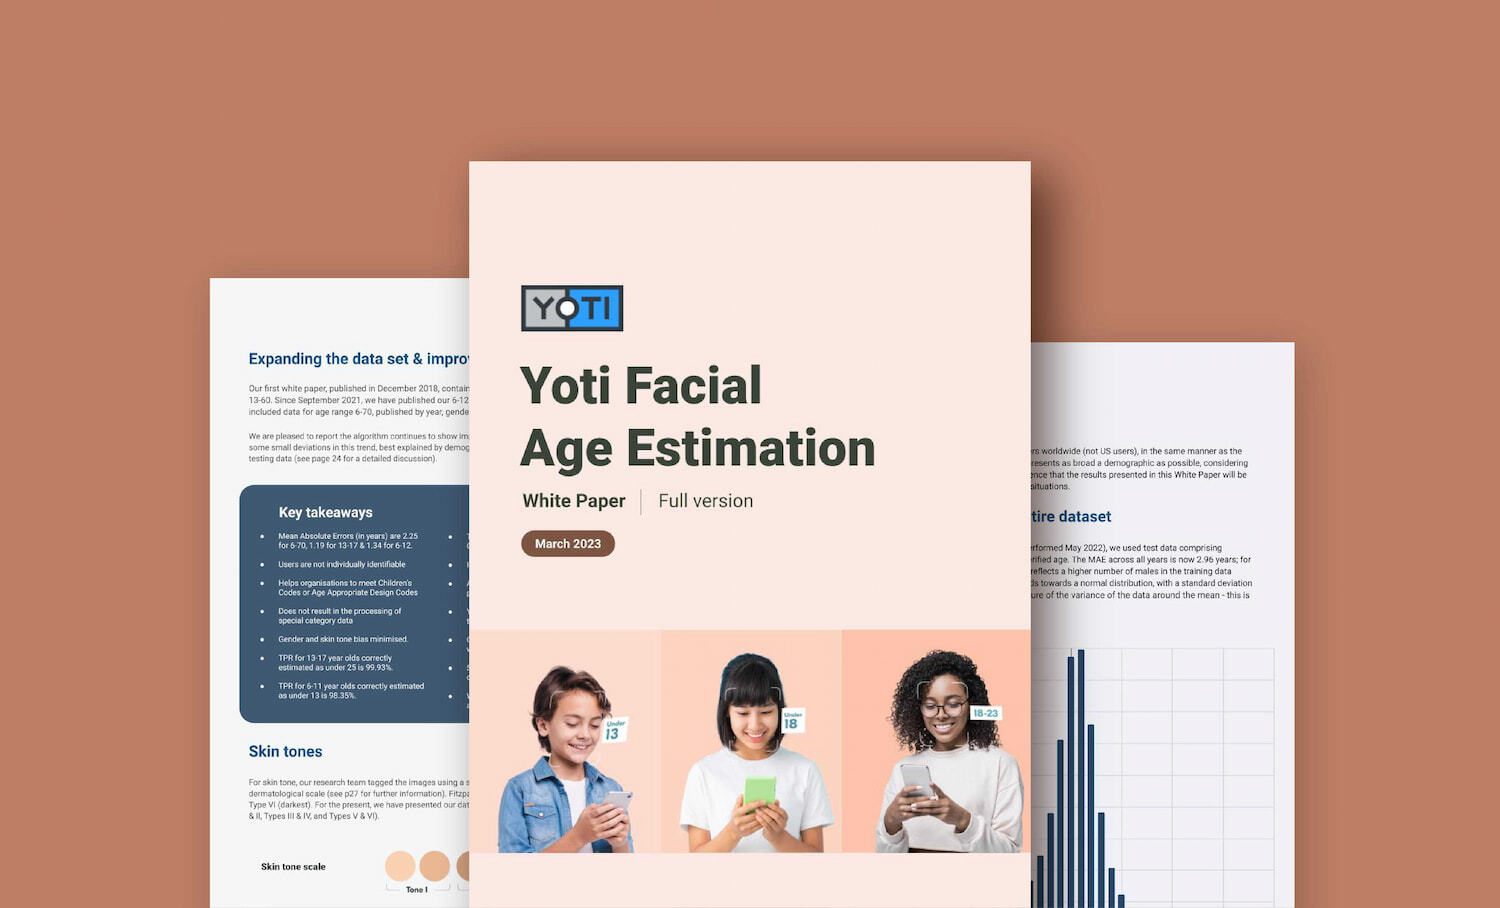 Yoti Face Age estimation white paper document preview image